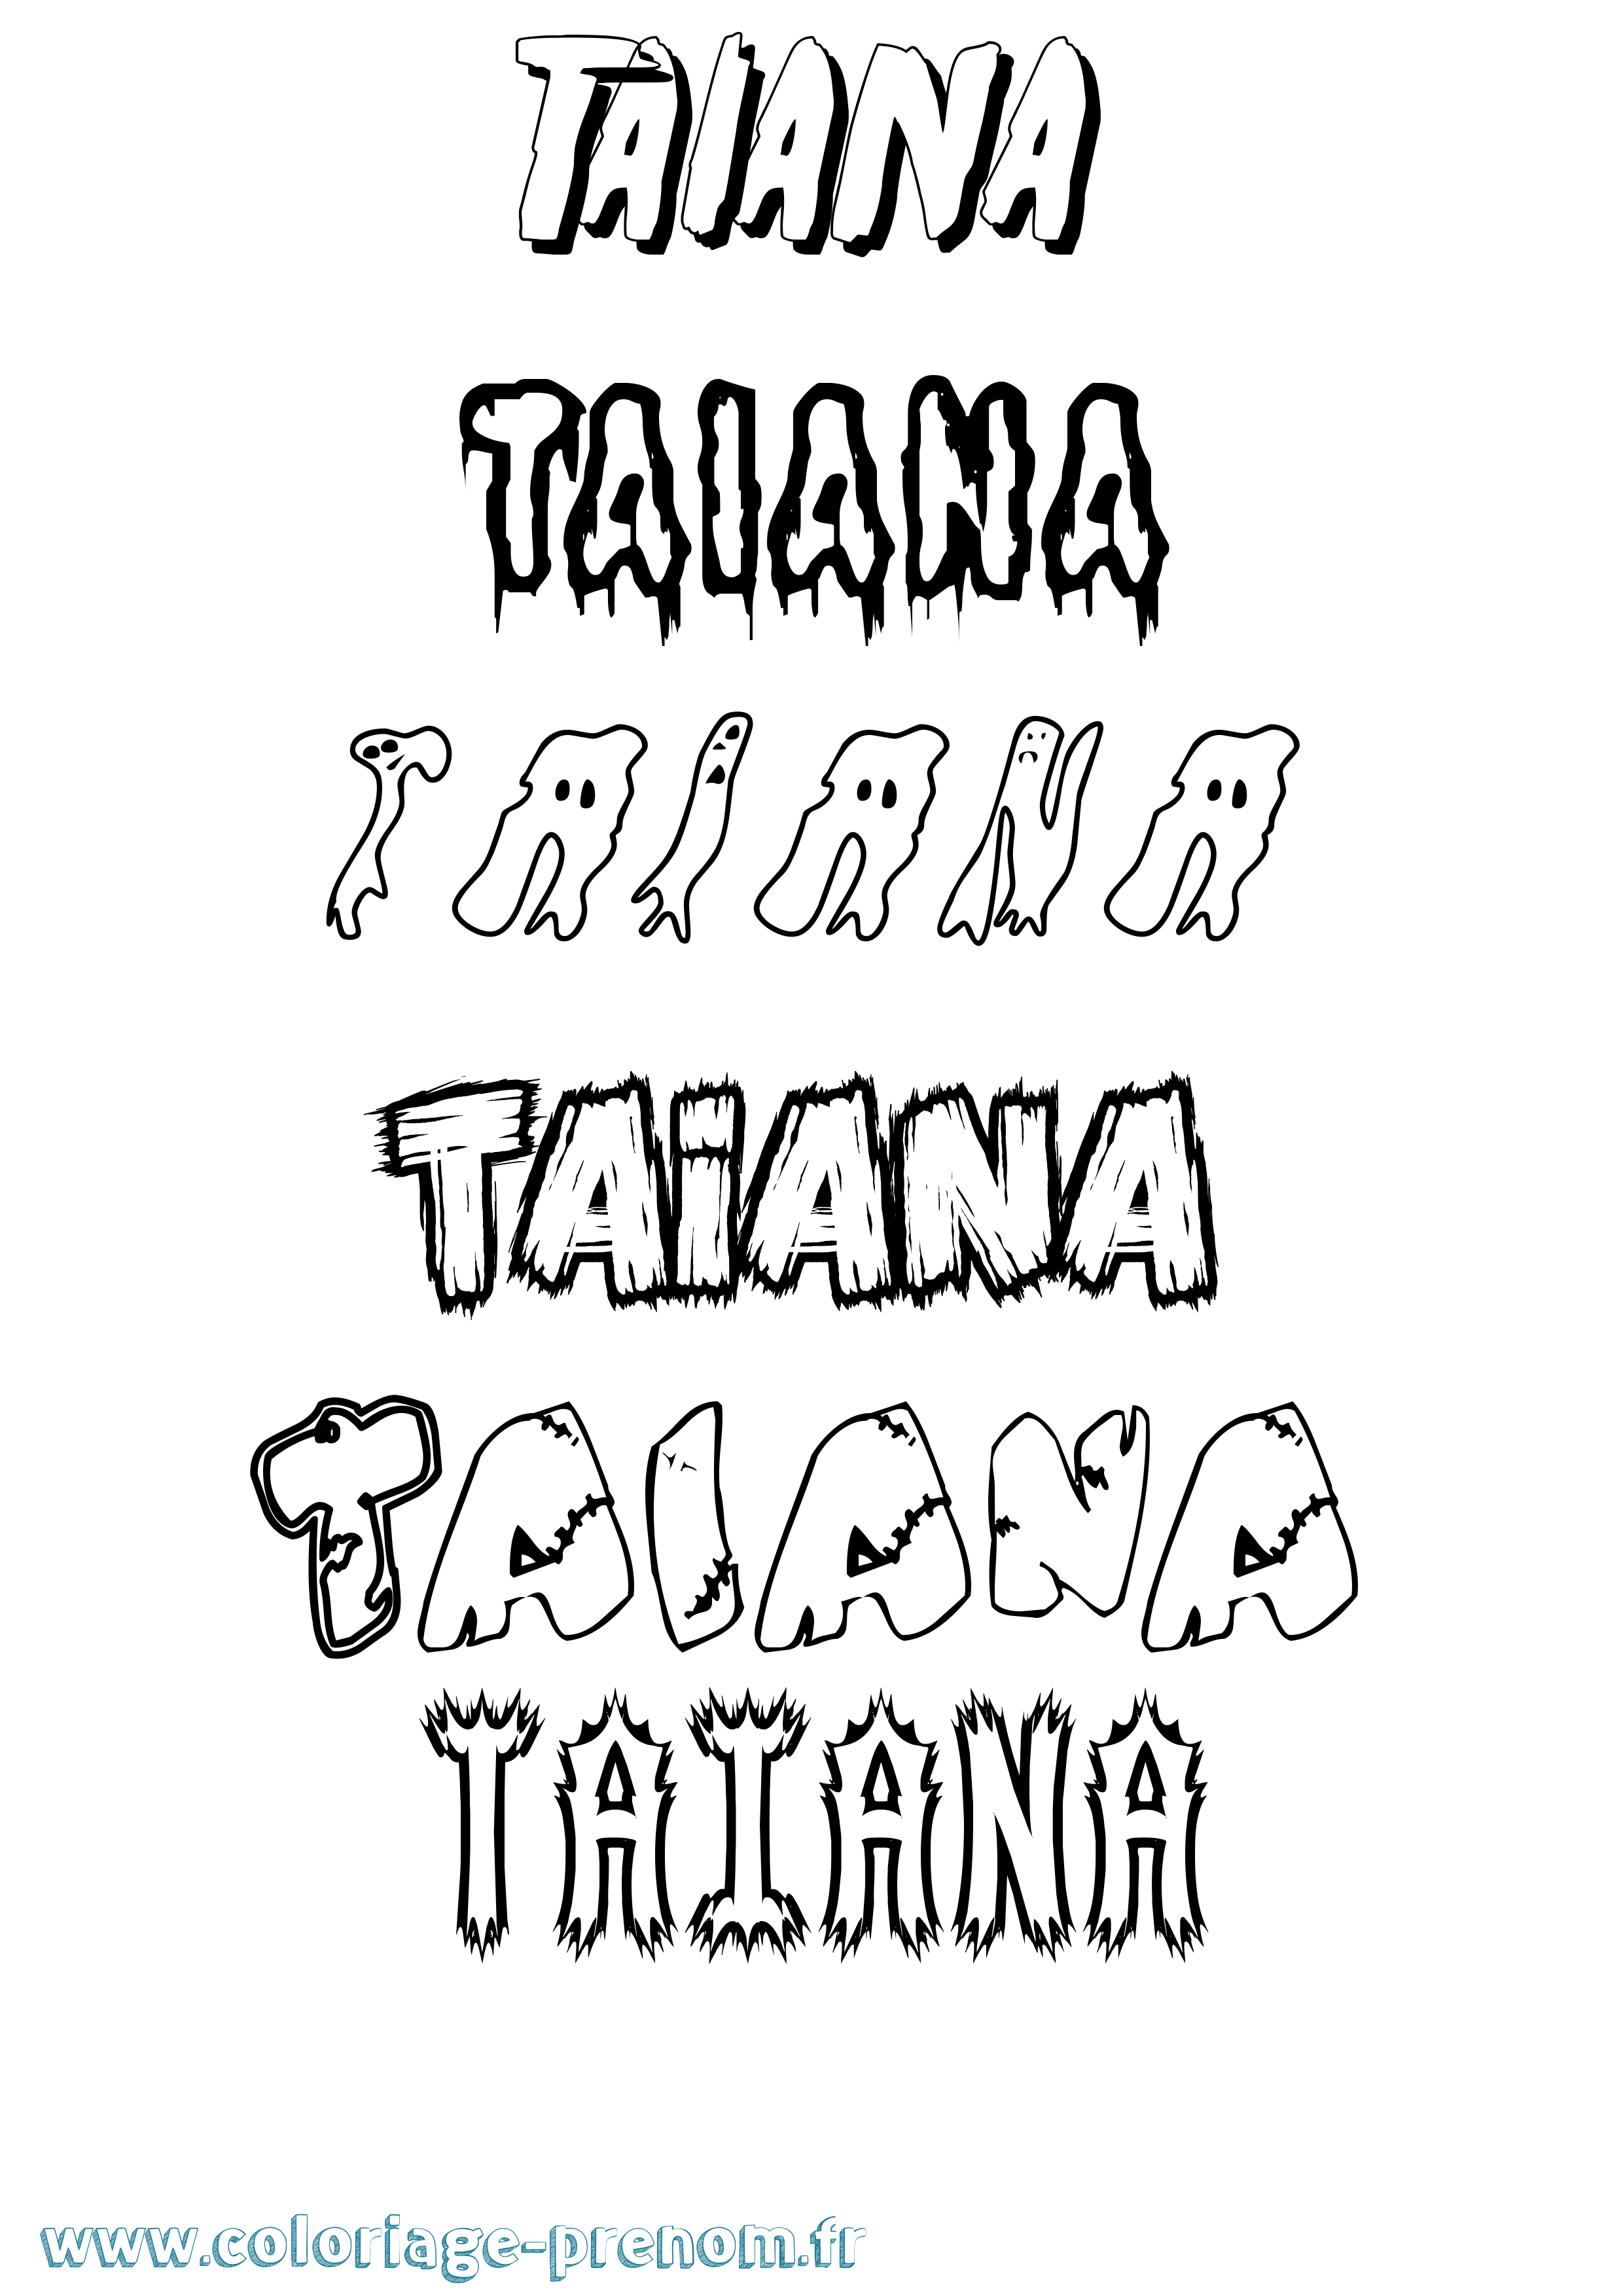 Coloriage prénom Taiana Frisson